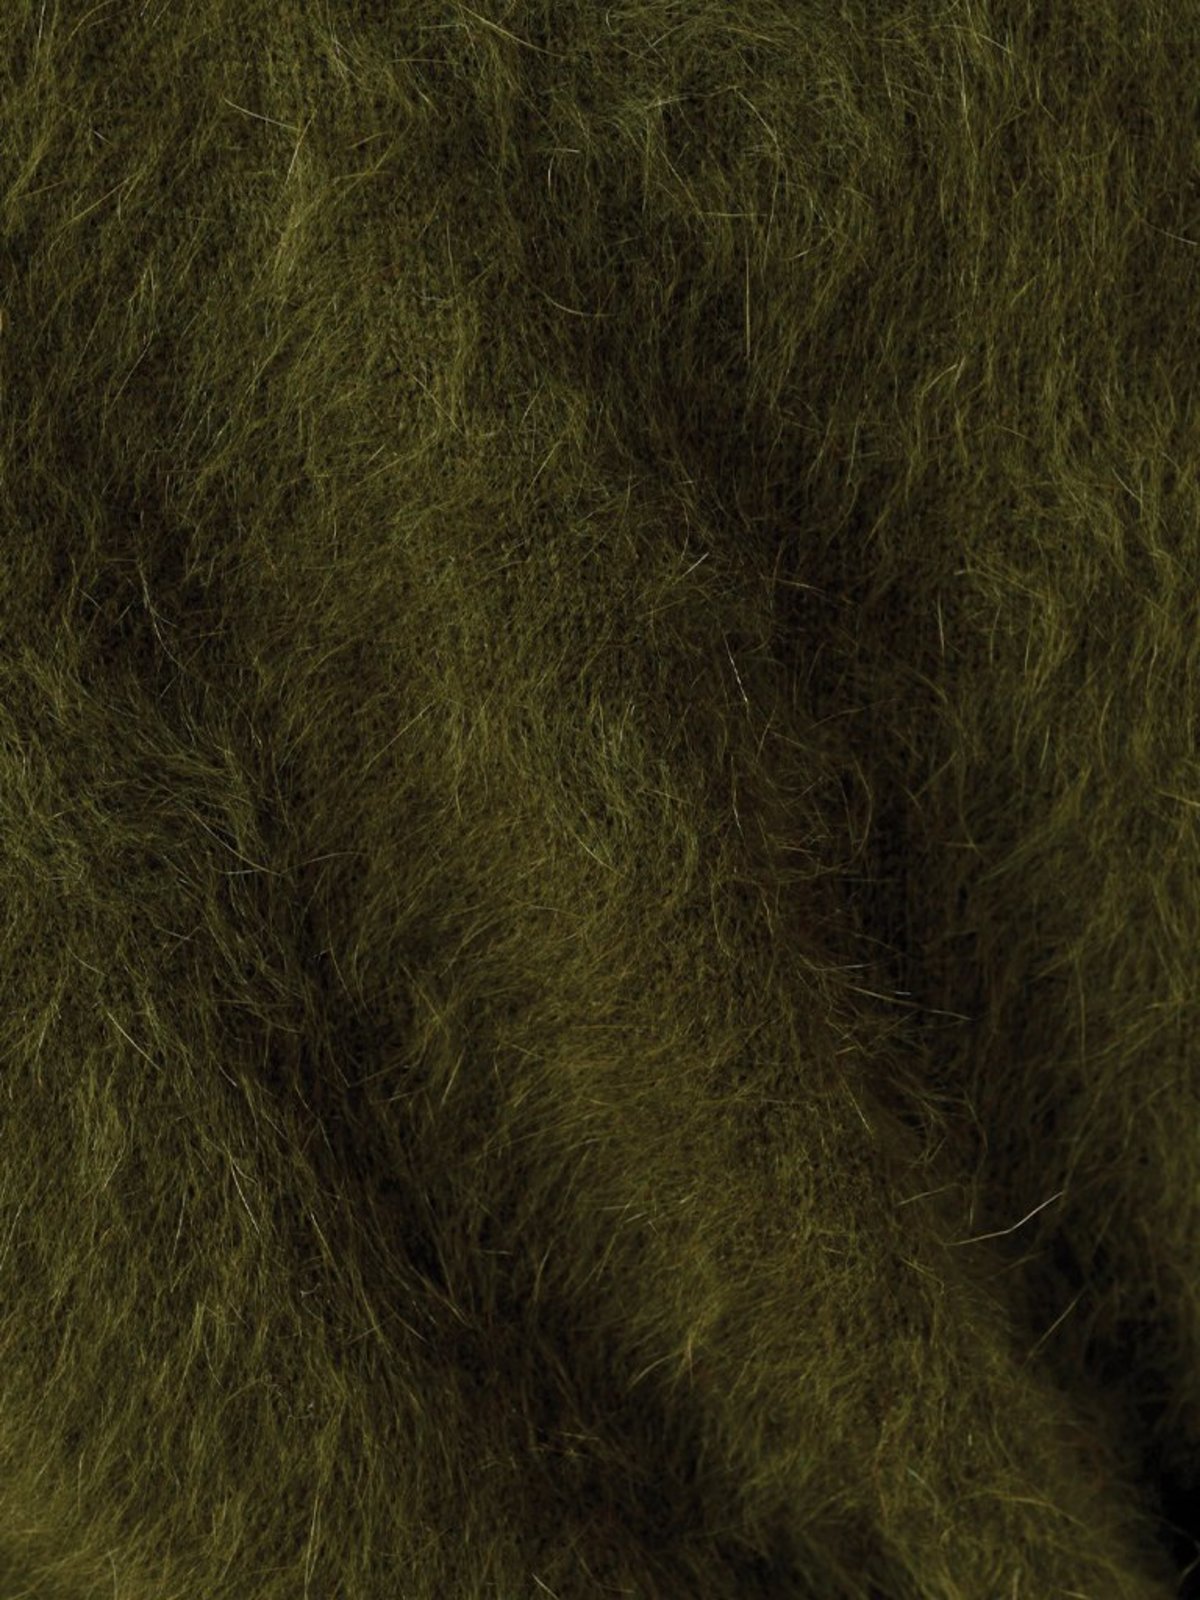 Bellerose - Datti Angora Sweater: Olive